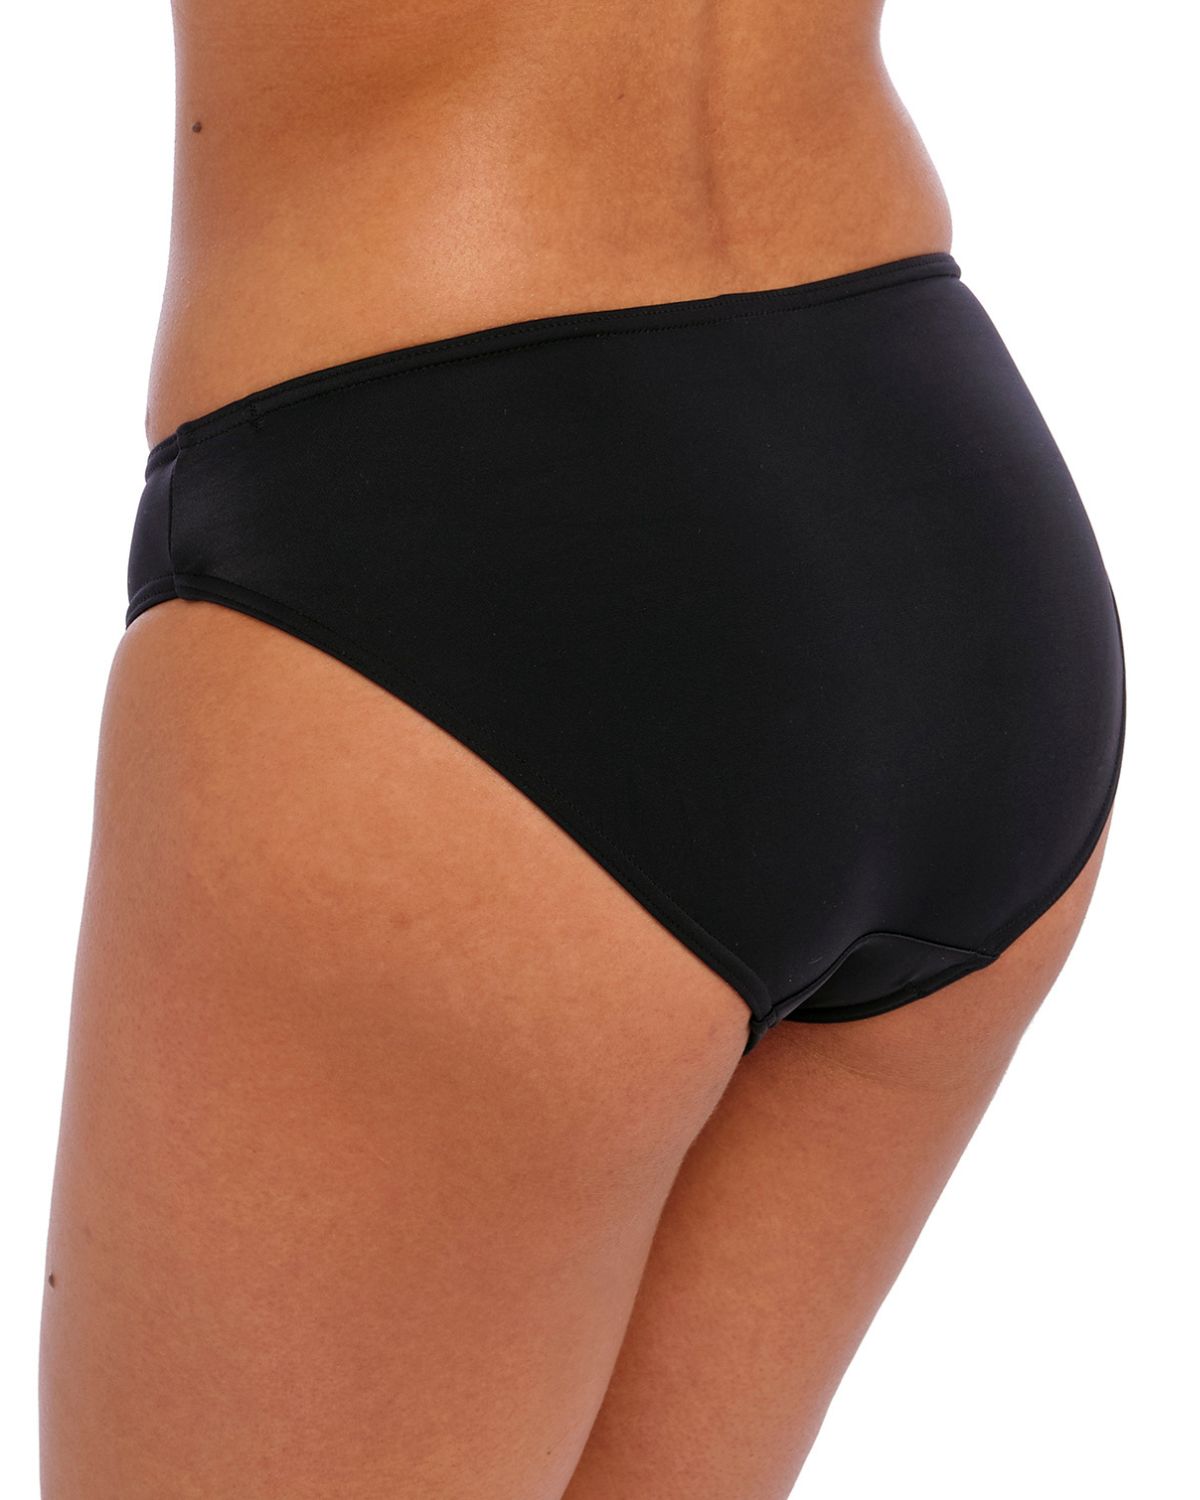 Model wearing a bikini brief bottom in black